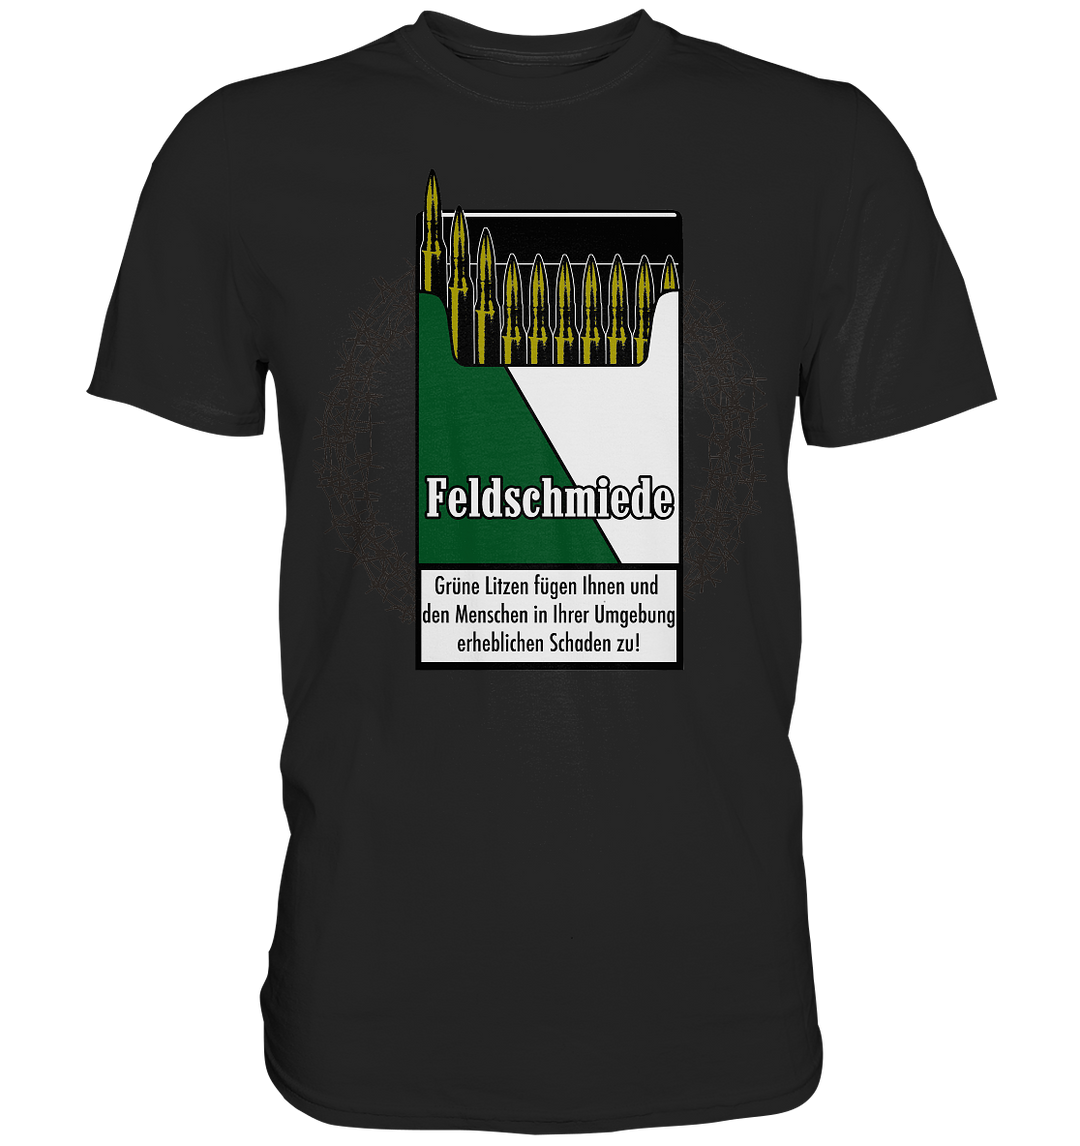 Grüne Litzen - Premium Shirt